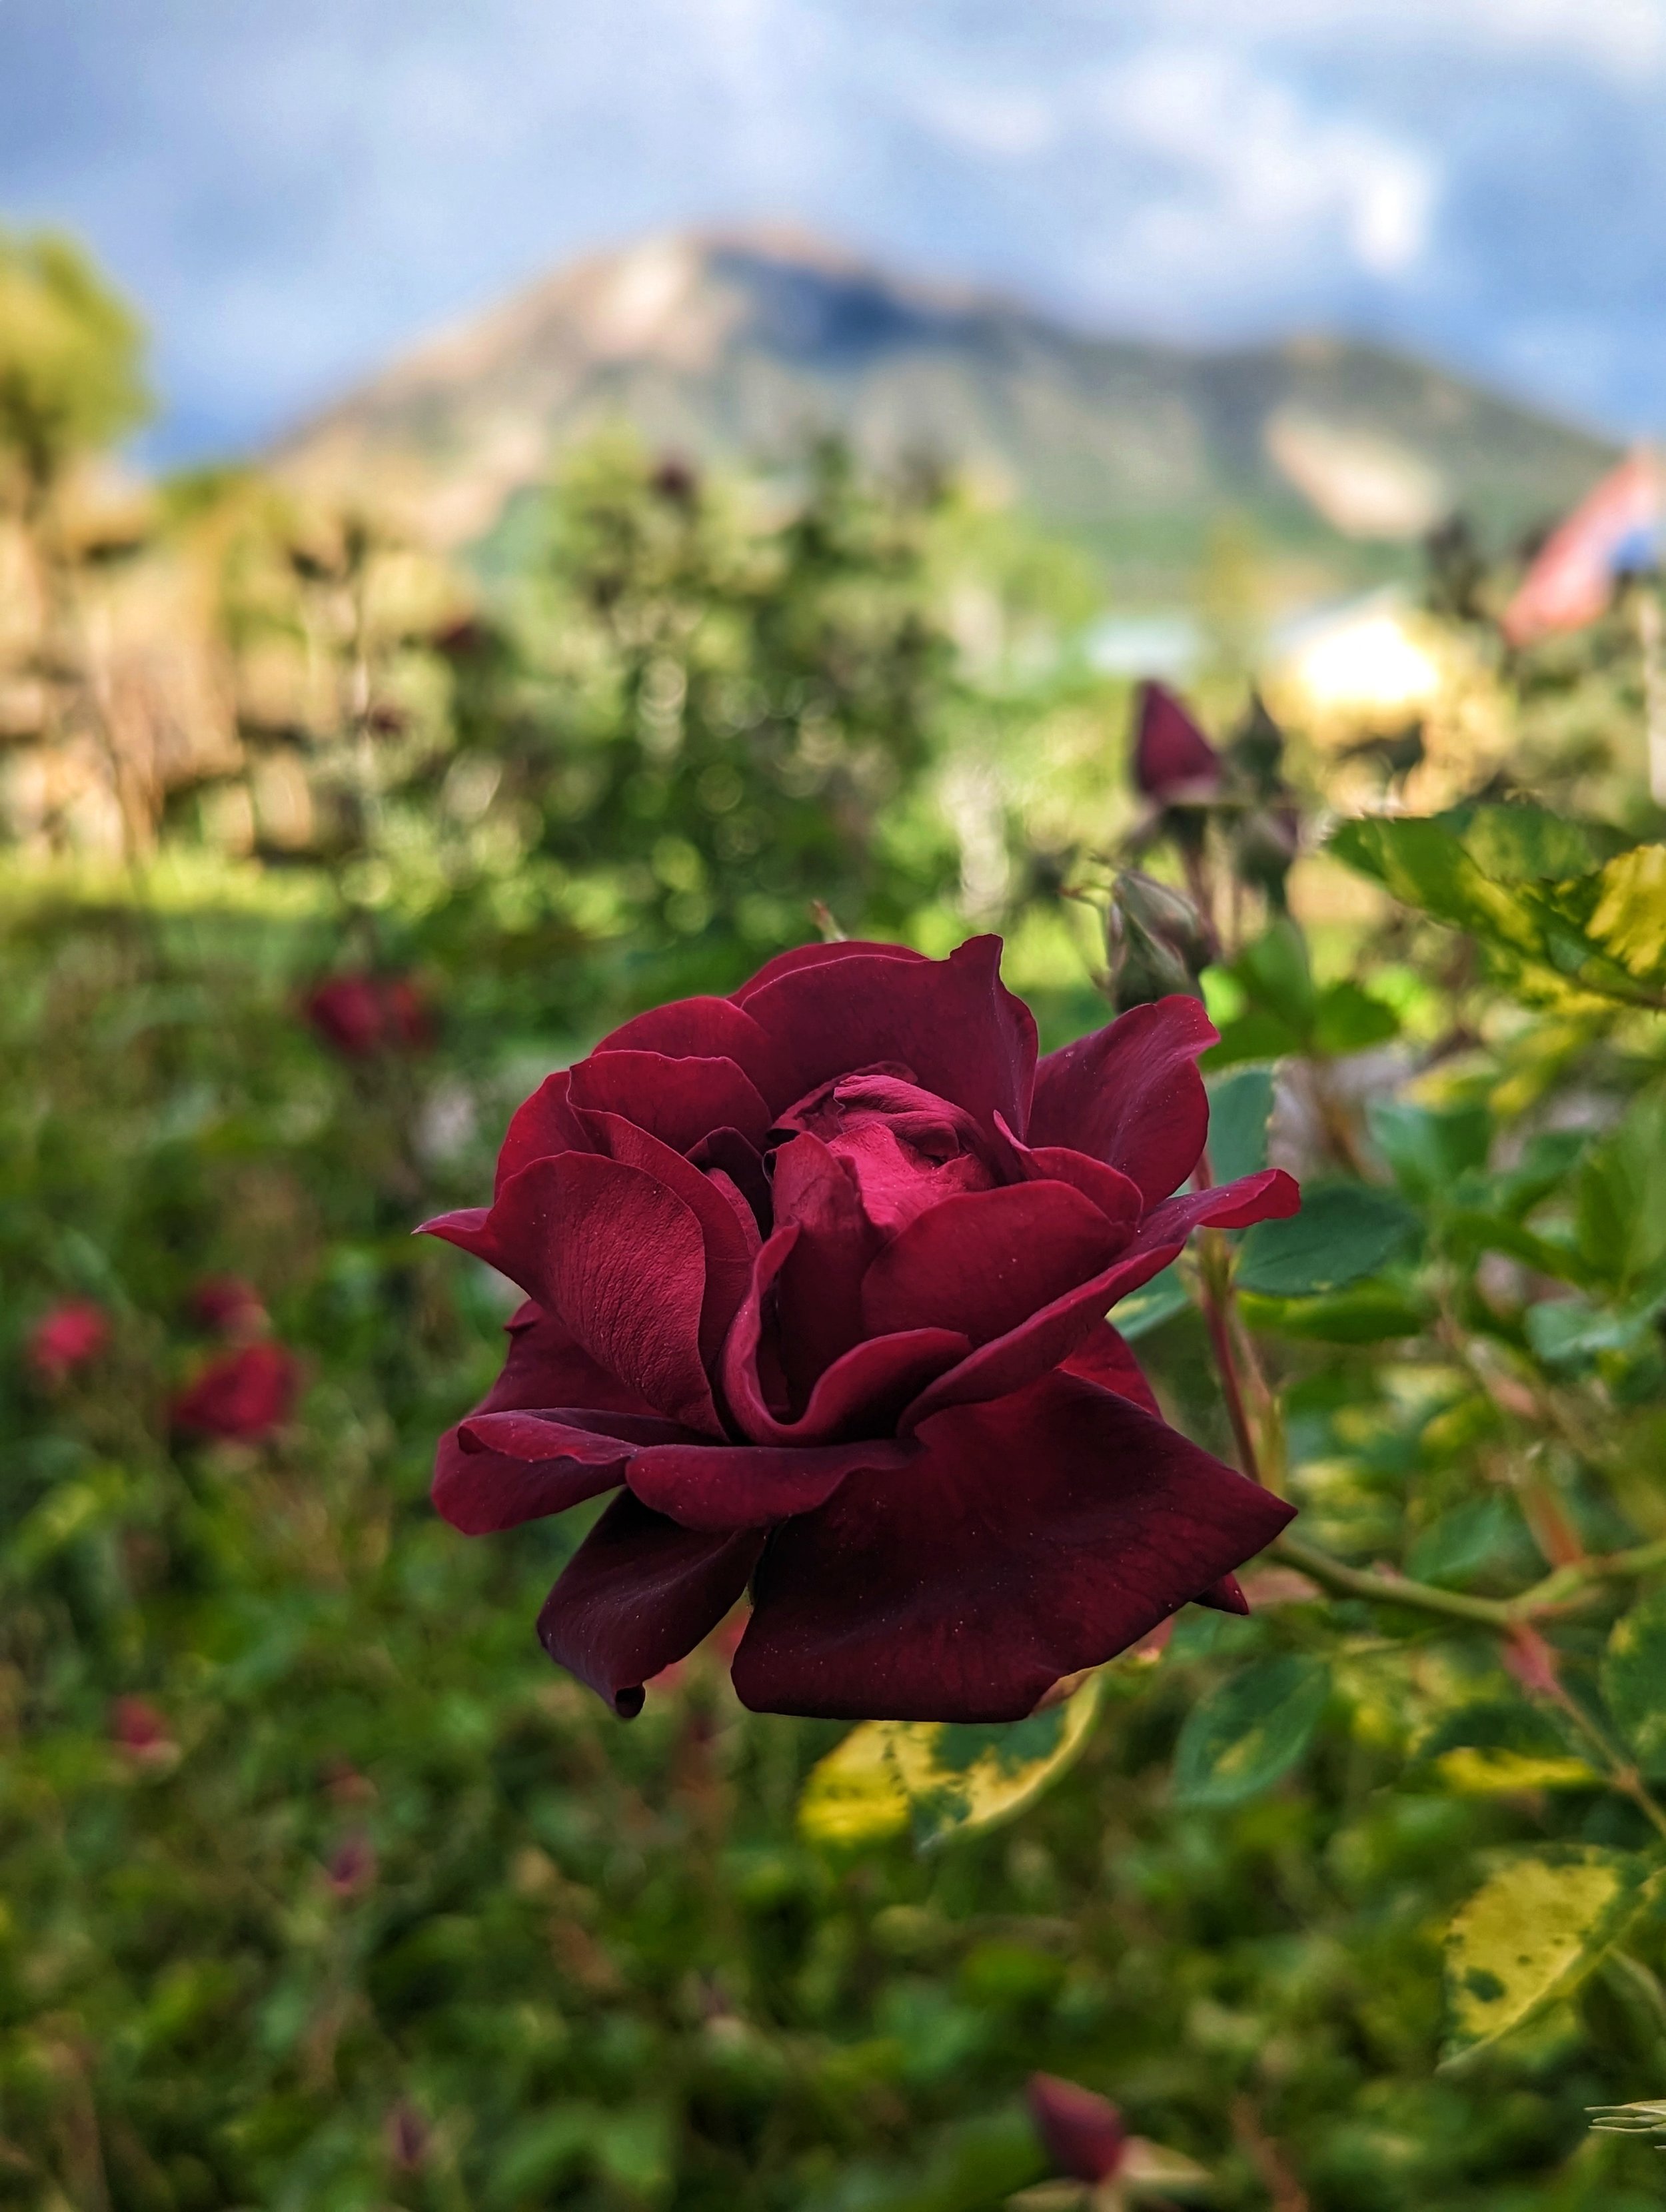 growing roses in colorado, dew lily farm.jpeg